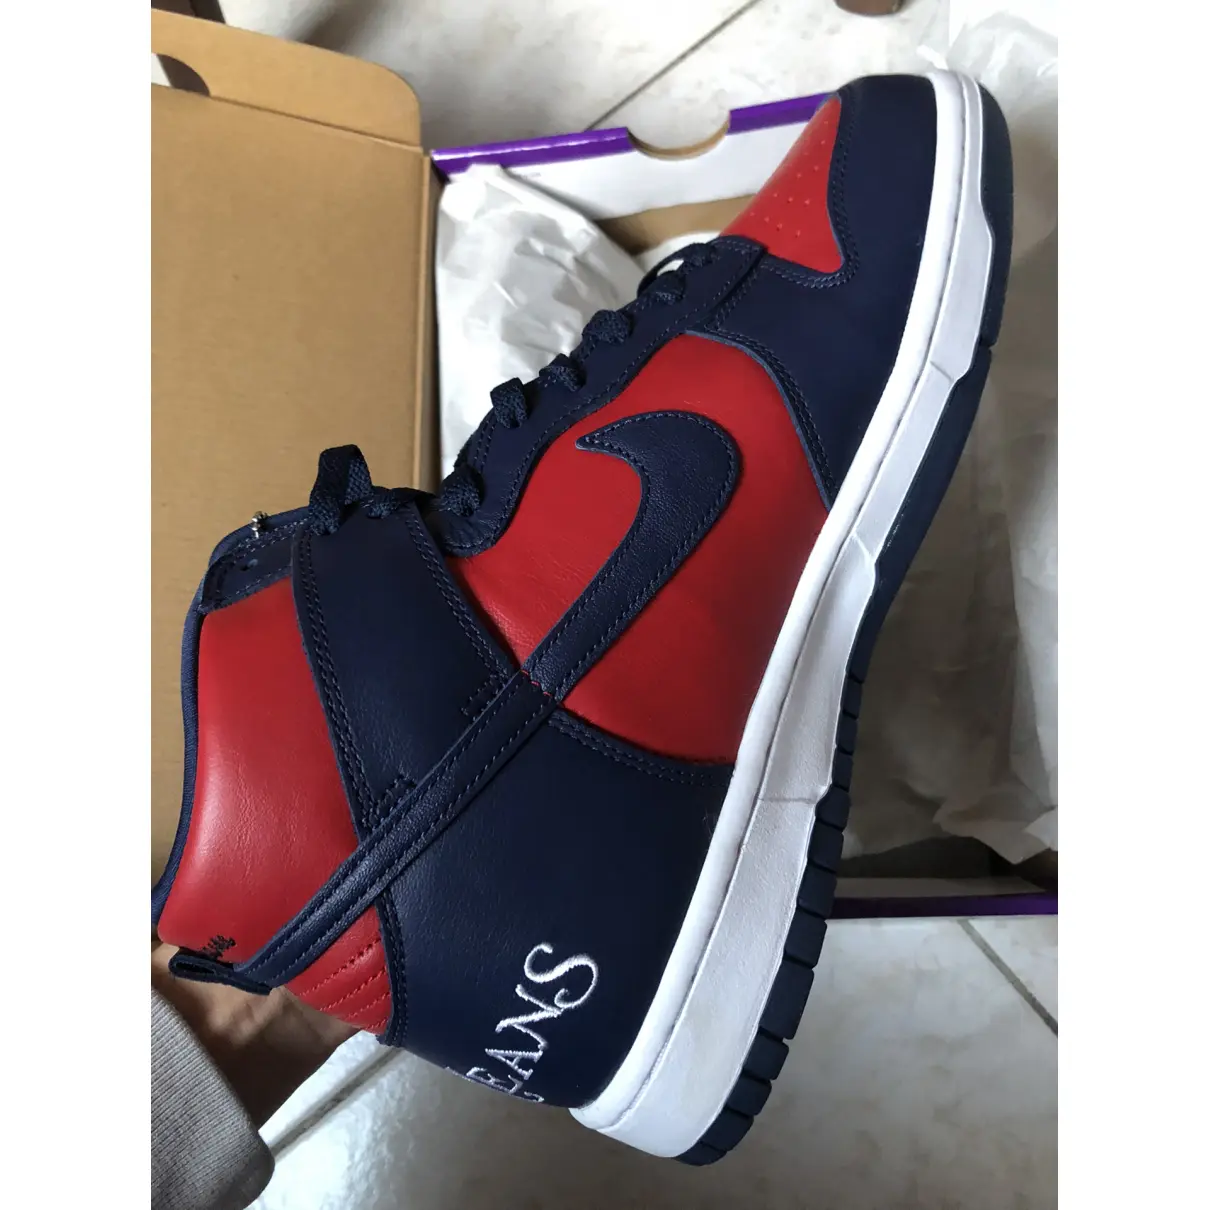 SB Dunk leather high trainers Nike x Supreme